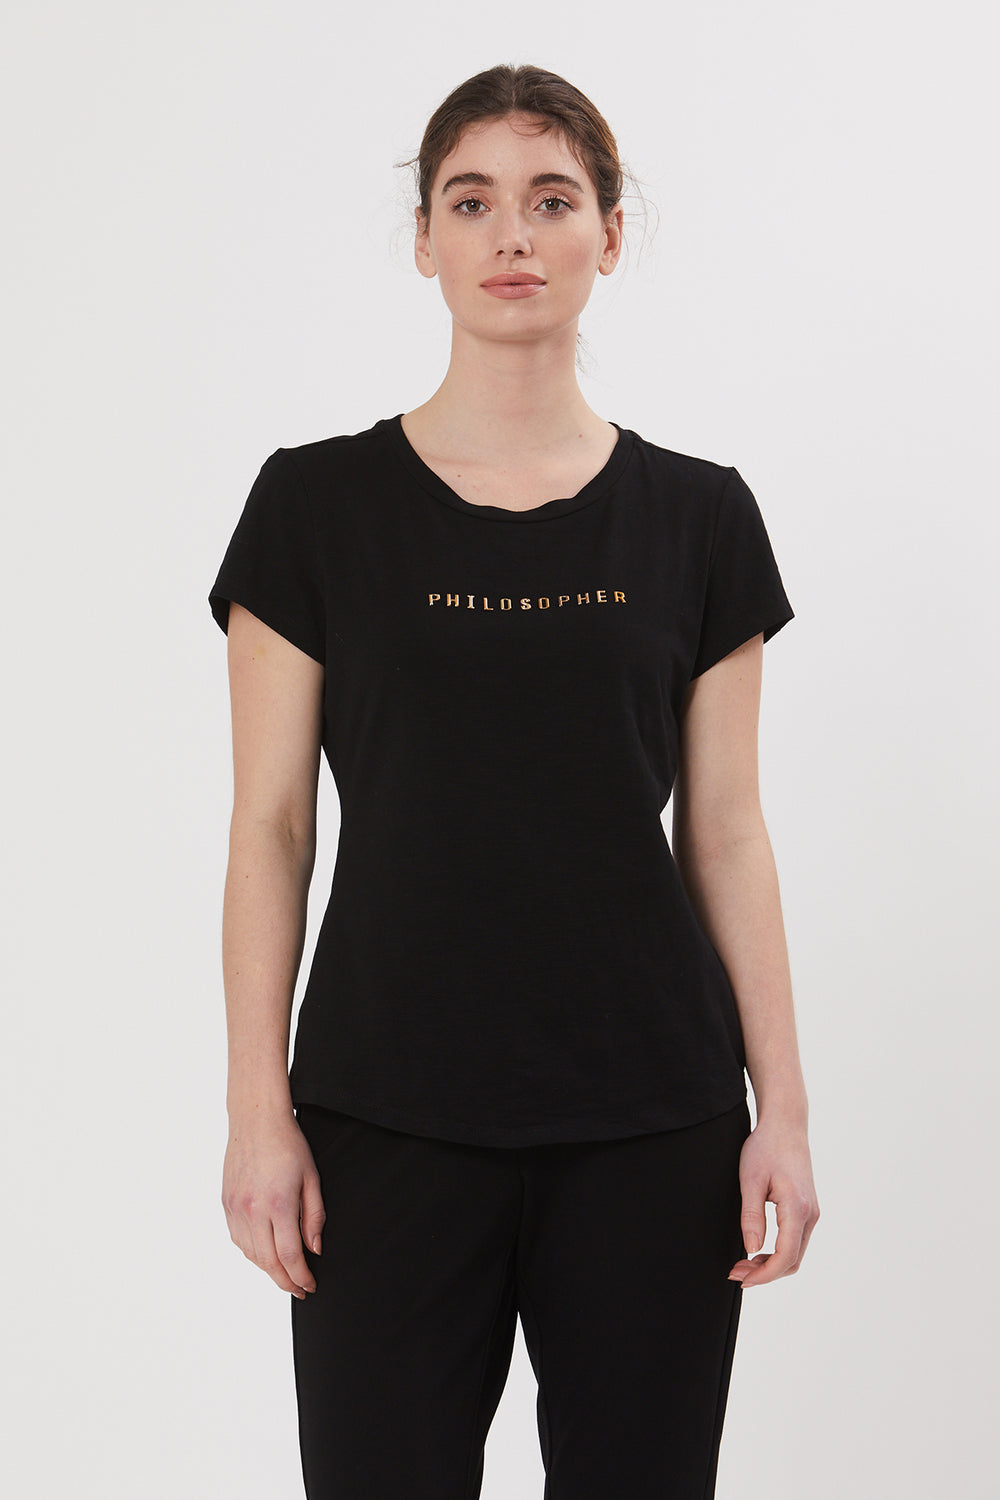 PBO Philosopher T-shirt T-SHIRTS Sort